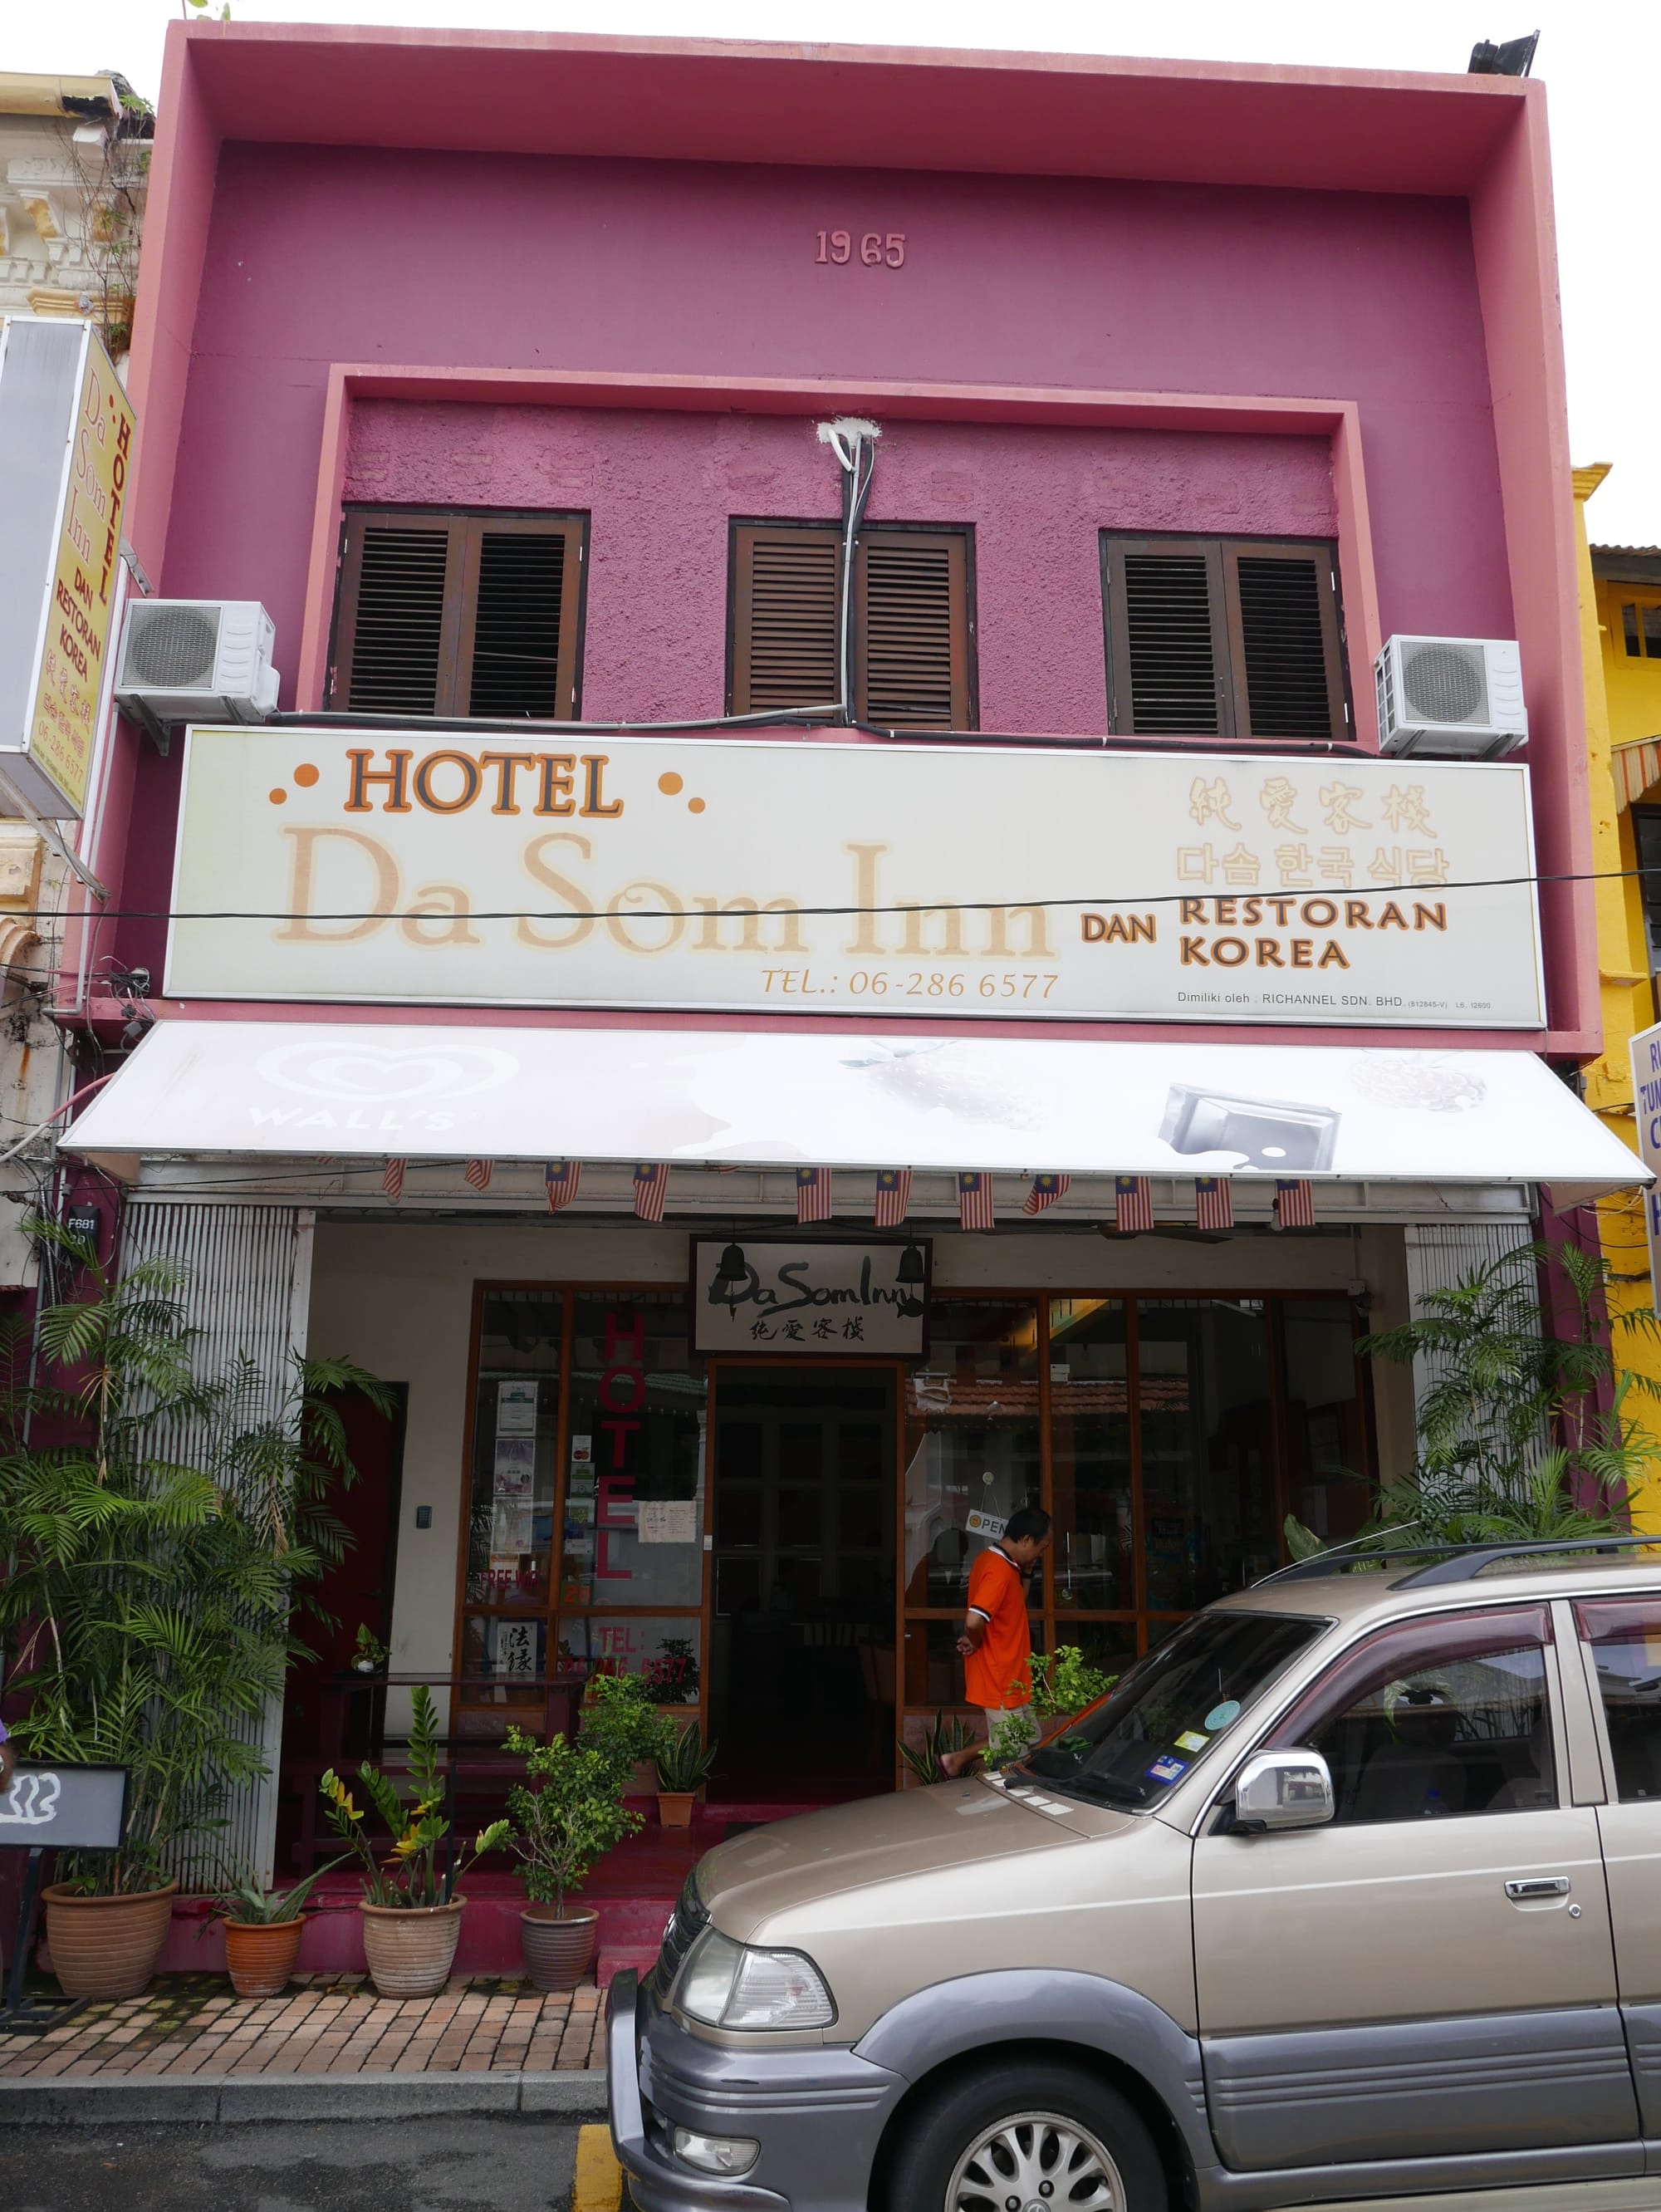 Photo by Author — Dasom Inn Hotel, 28 Jalan Tukang Emas 75200, Malacca, Melaka, Malaysia